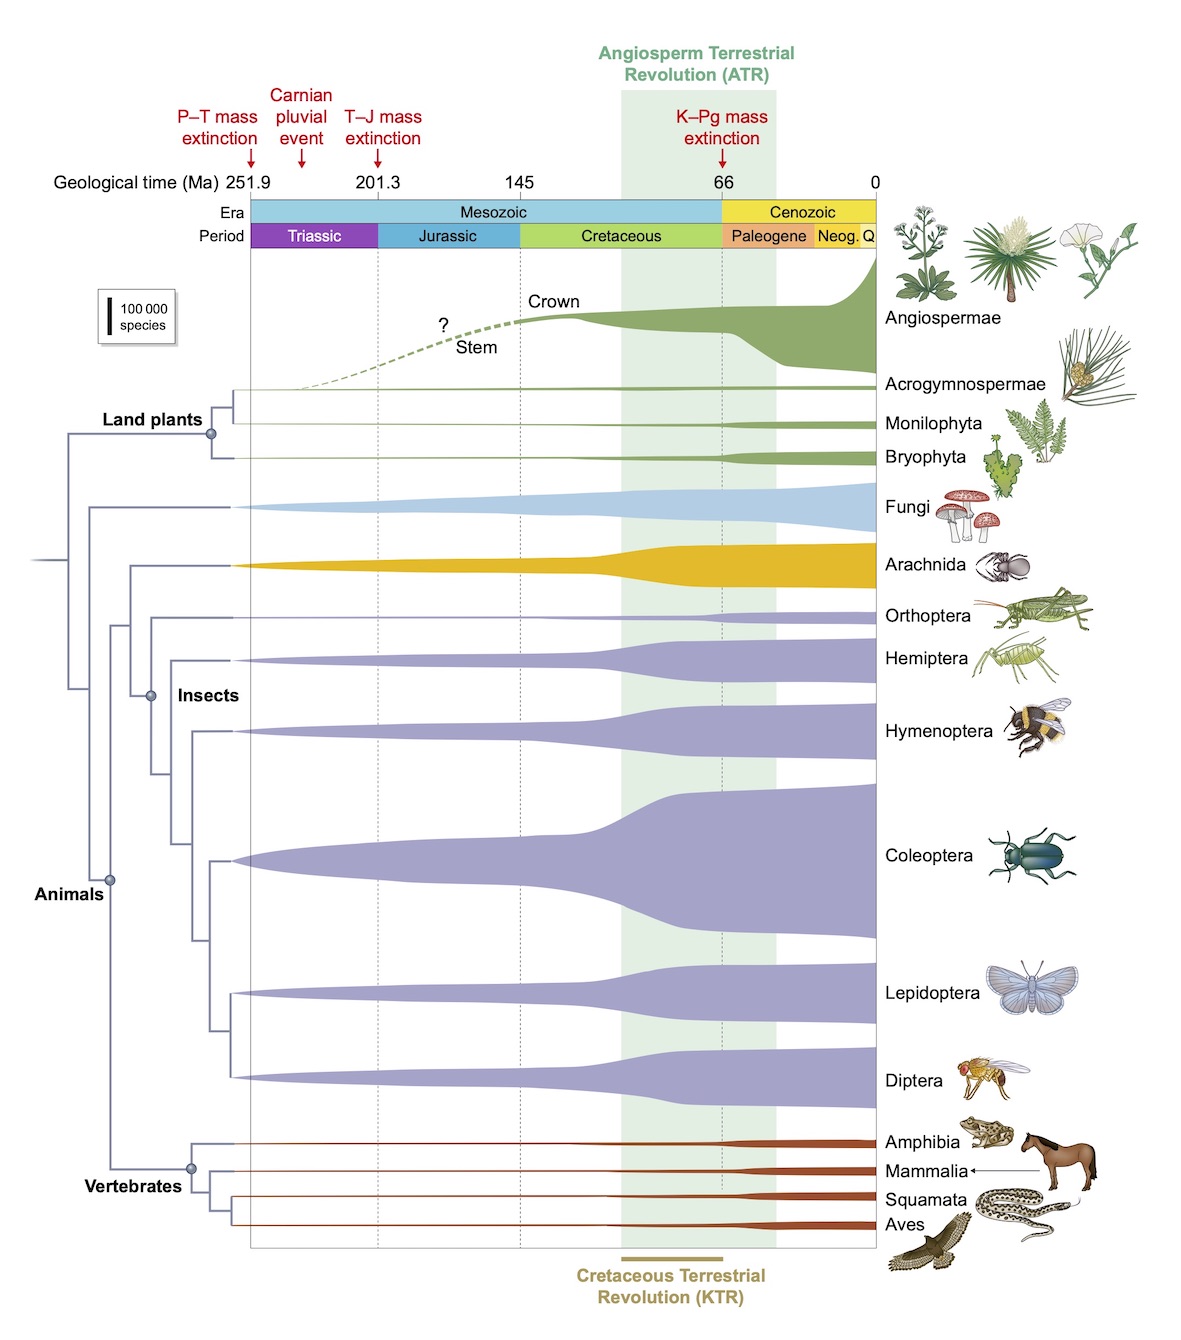 plant evolution diagram